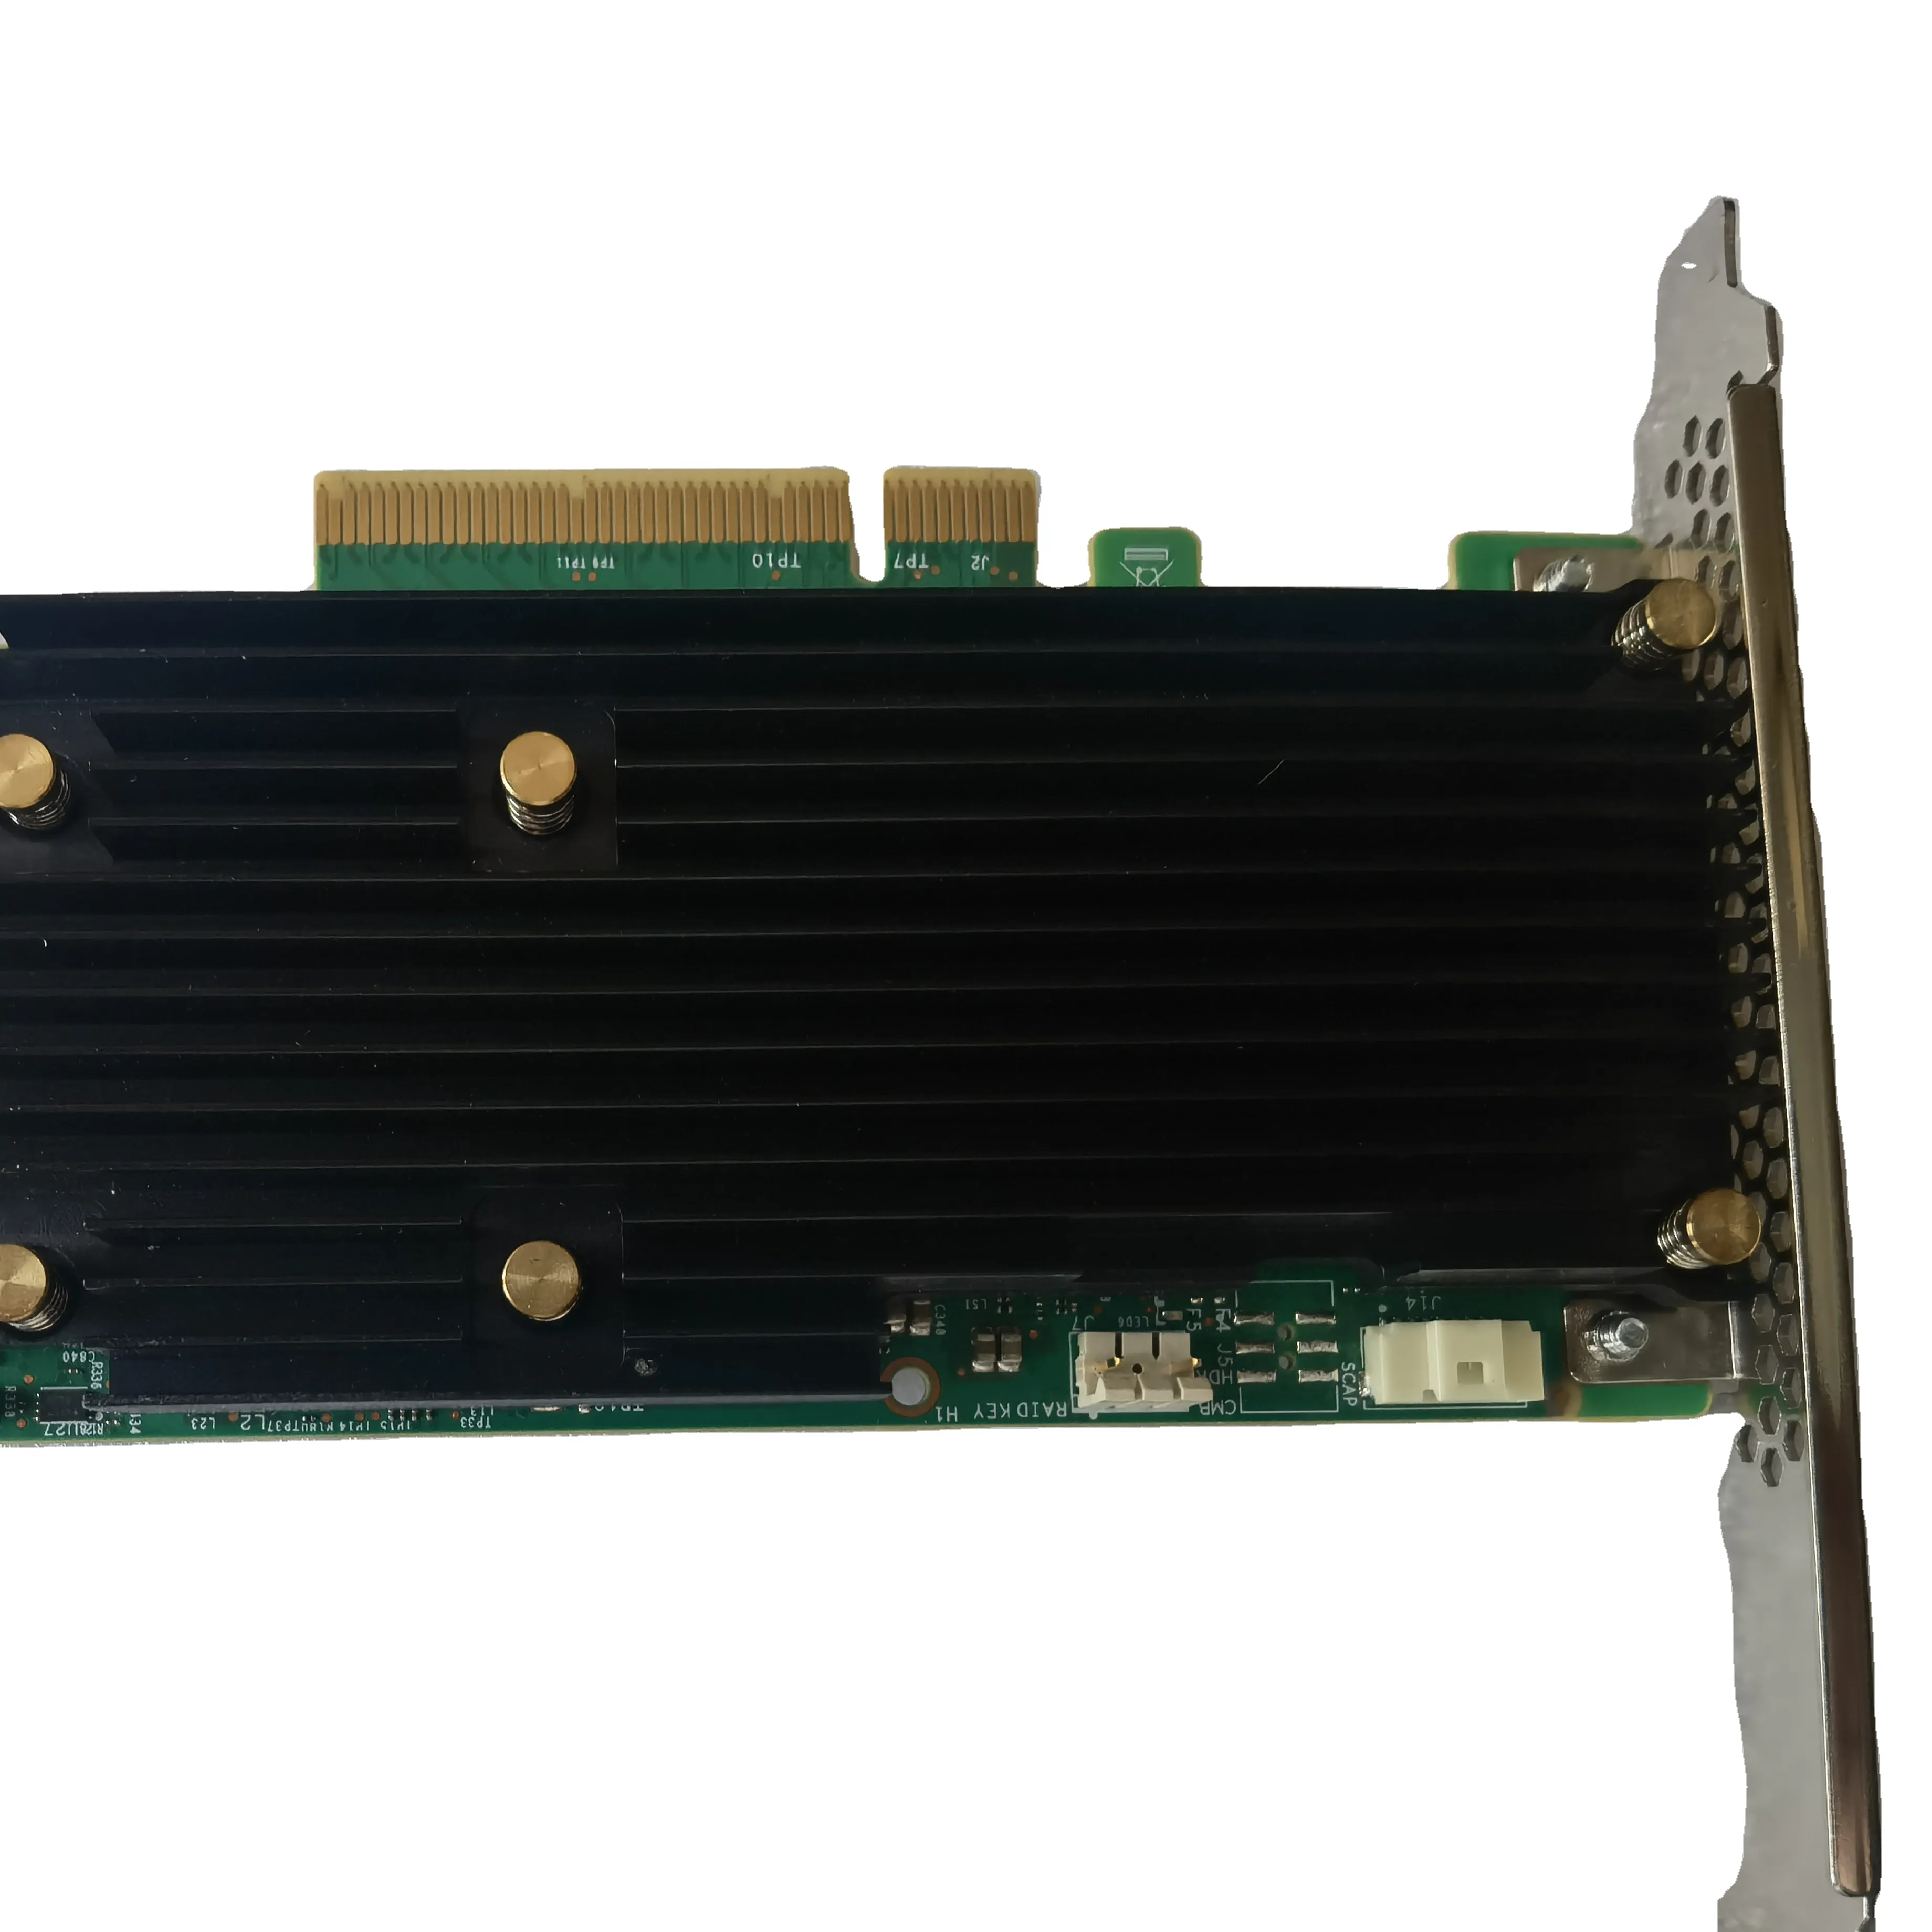 New original huawei 9460-8i RAID card 2GB cache 12GB PCIE3.0 NVMe disk array card